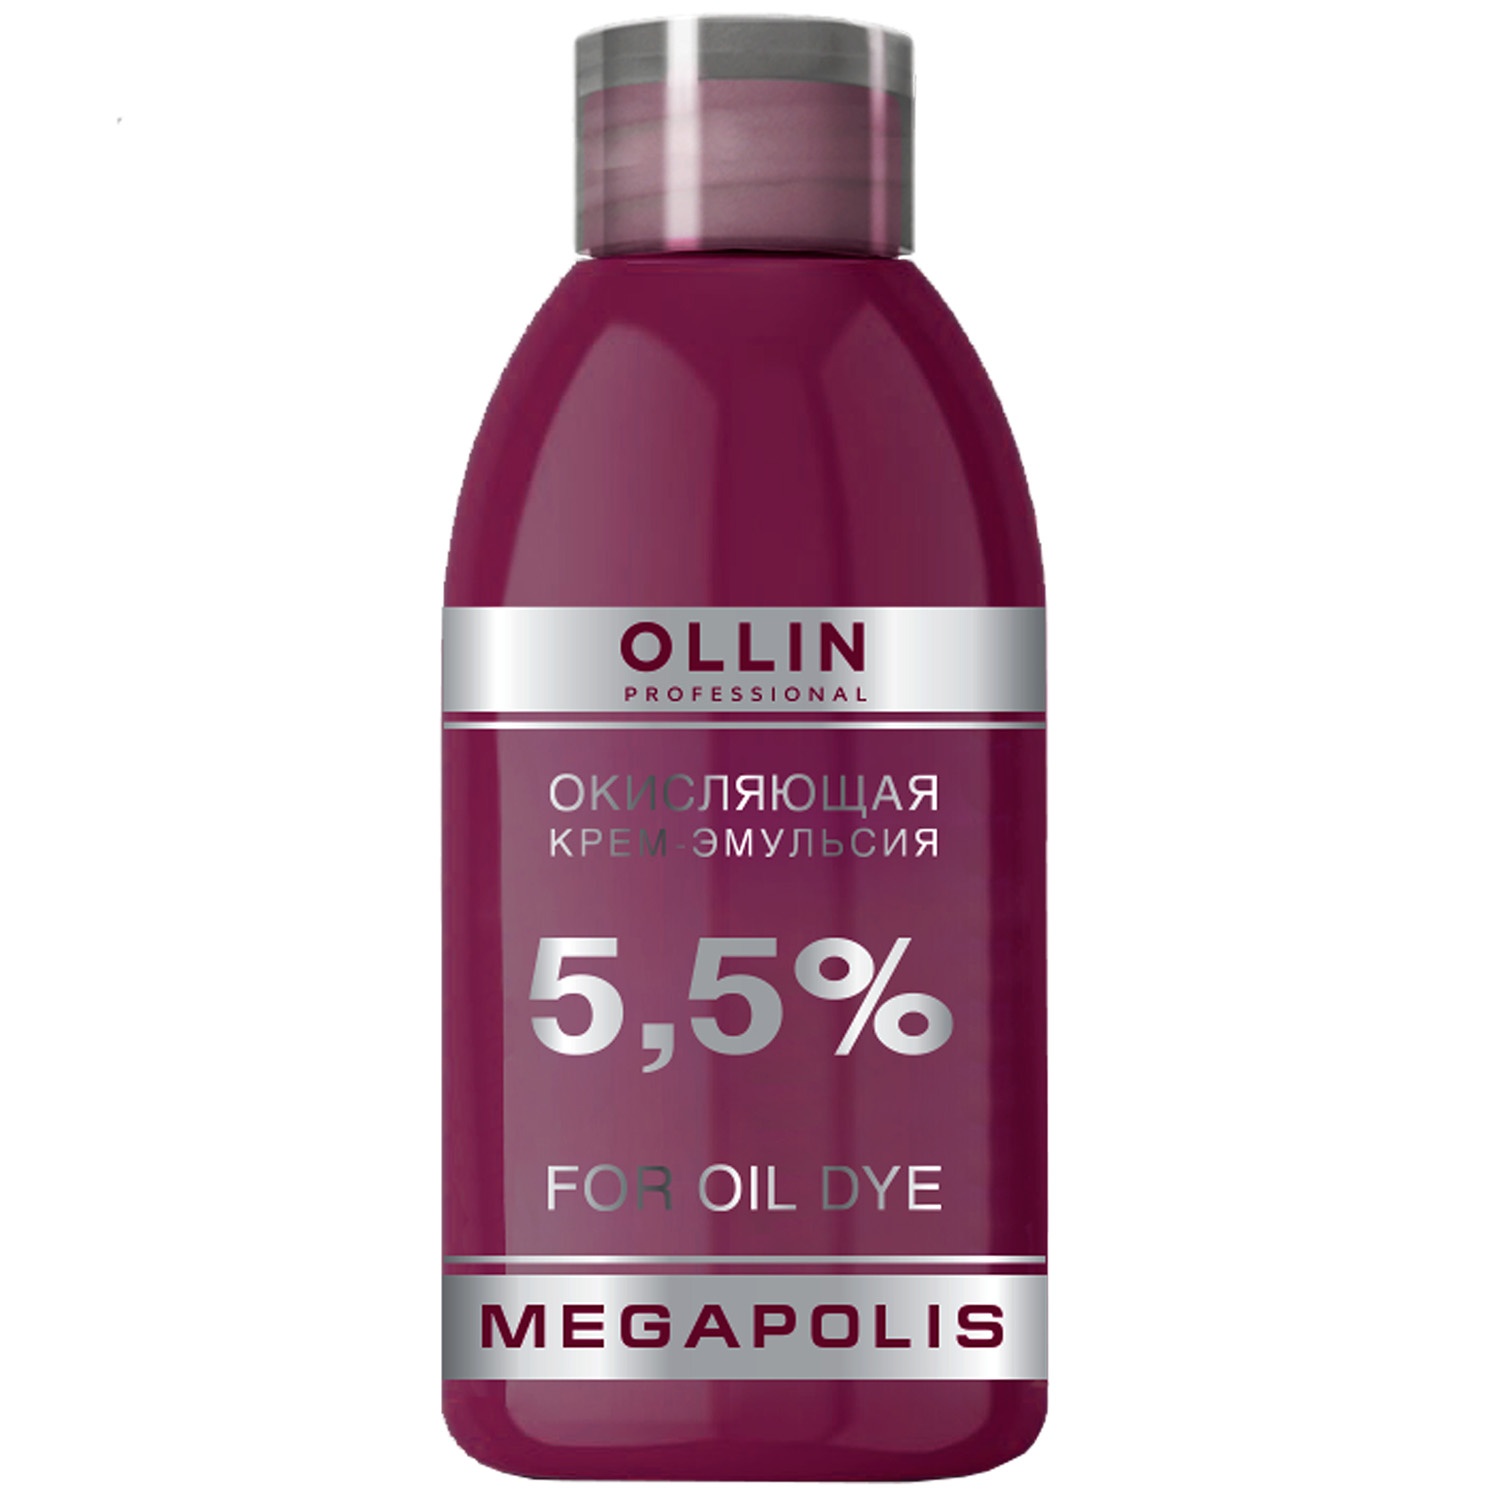 Ollin Professional Окисляющая крем-эмульсия 5,5%, 75 мл (Ollin Professional, Megapolis) окисляющая крем эмульсия 2 7% ollin professional megapolis 75 мл